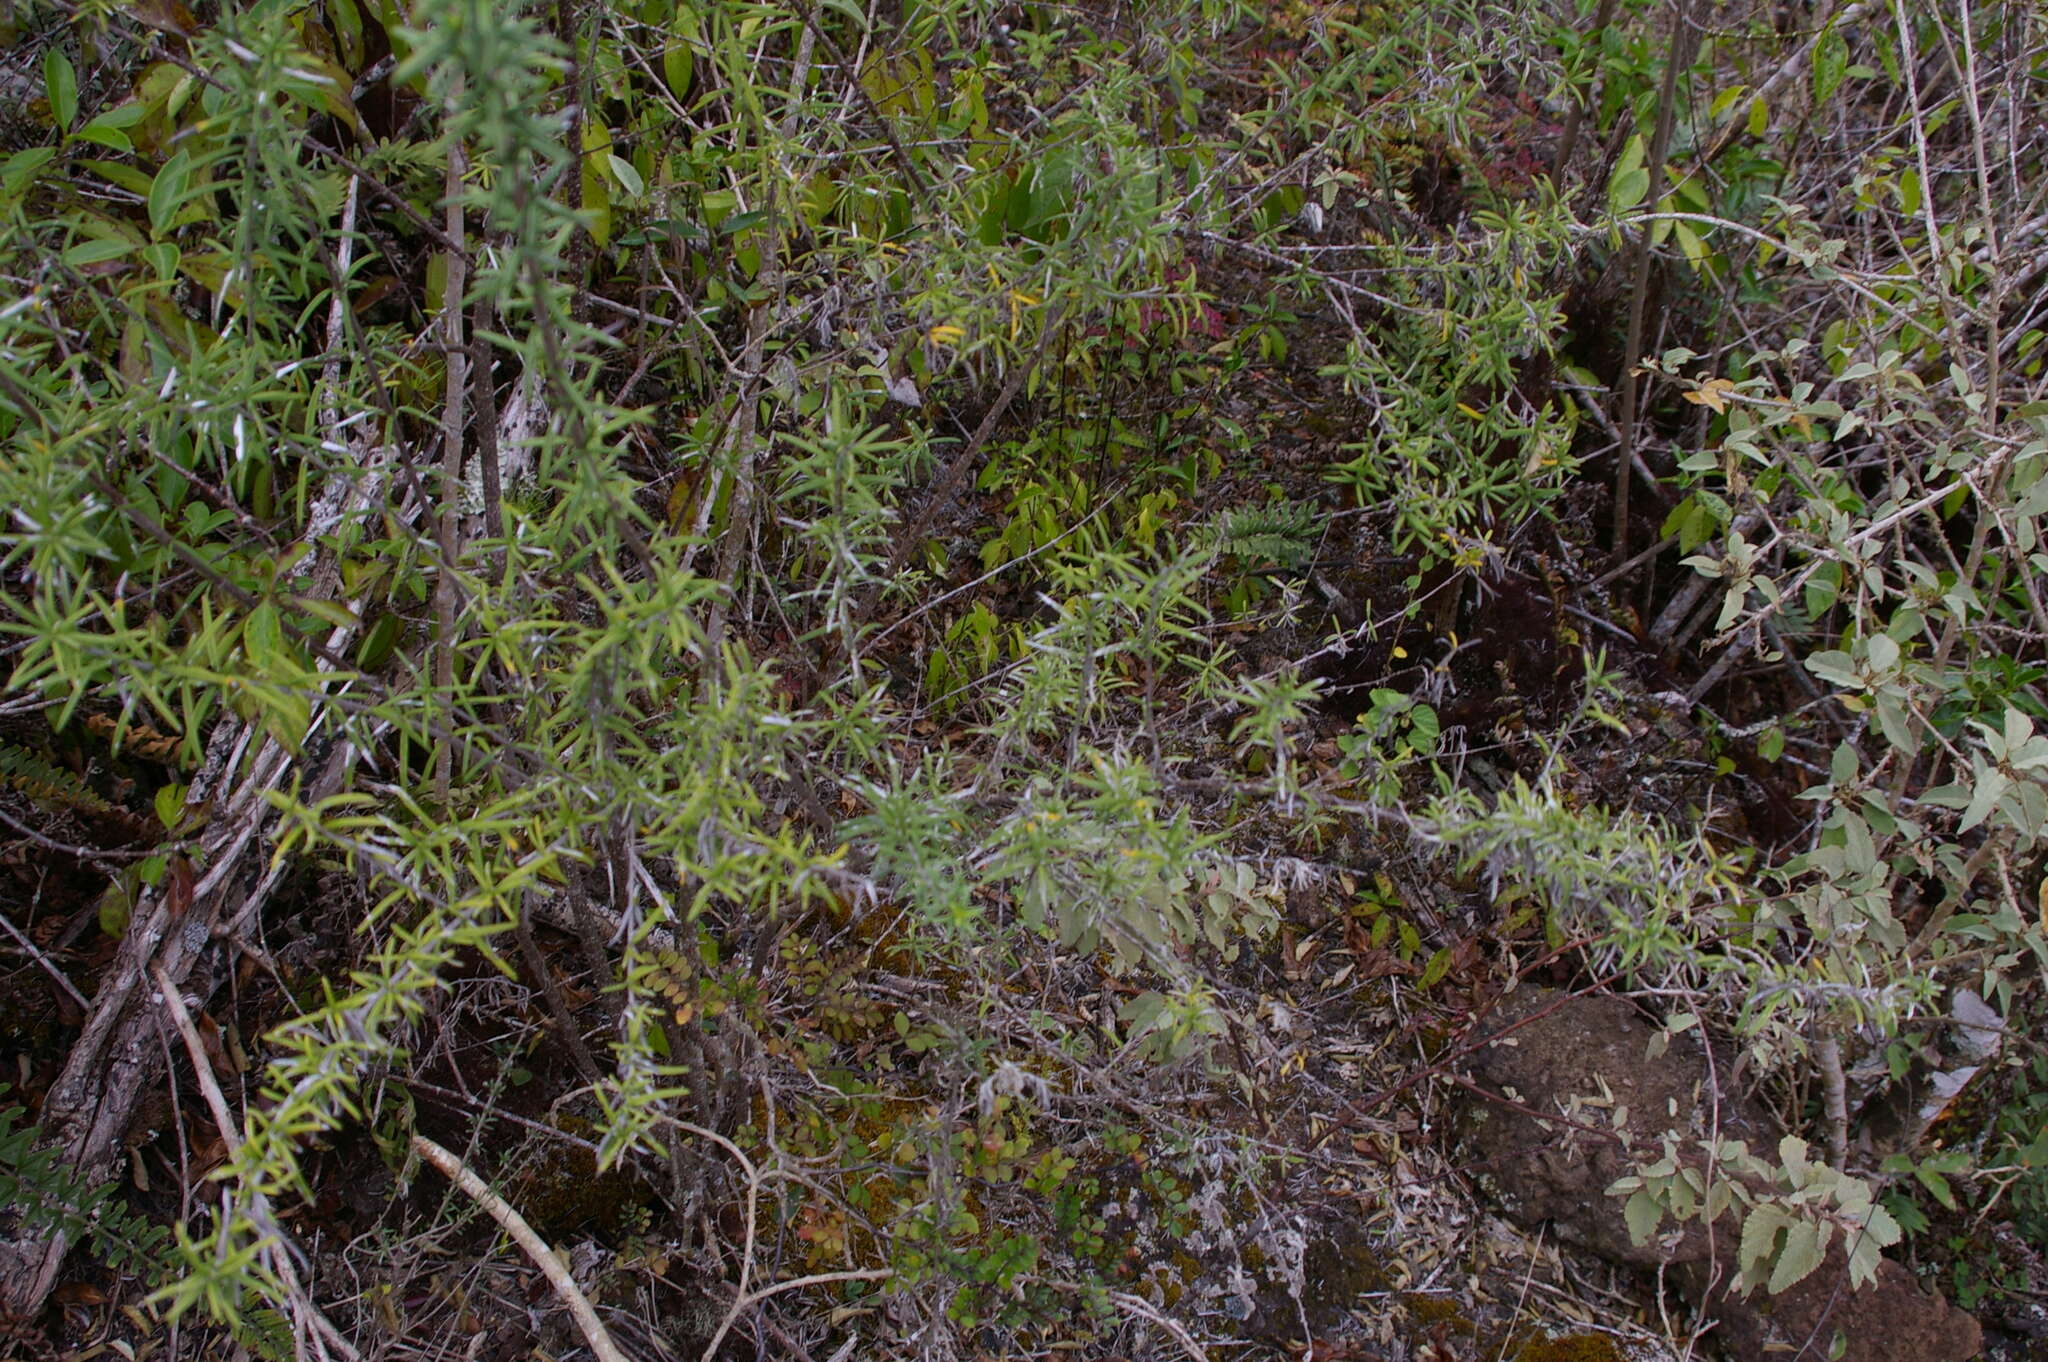 Image of Trigonopterum laricifolium (Hook. fil.) W. L. Wagner & H. Rob.